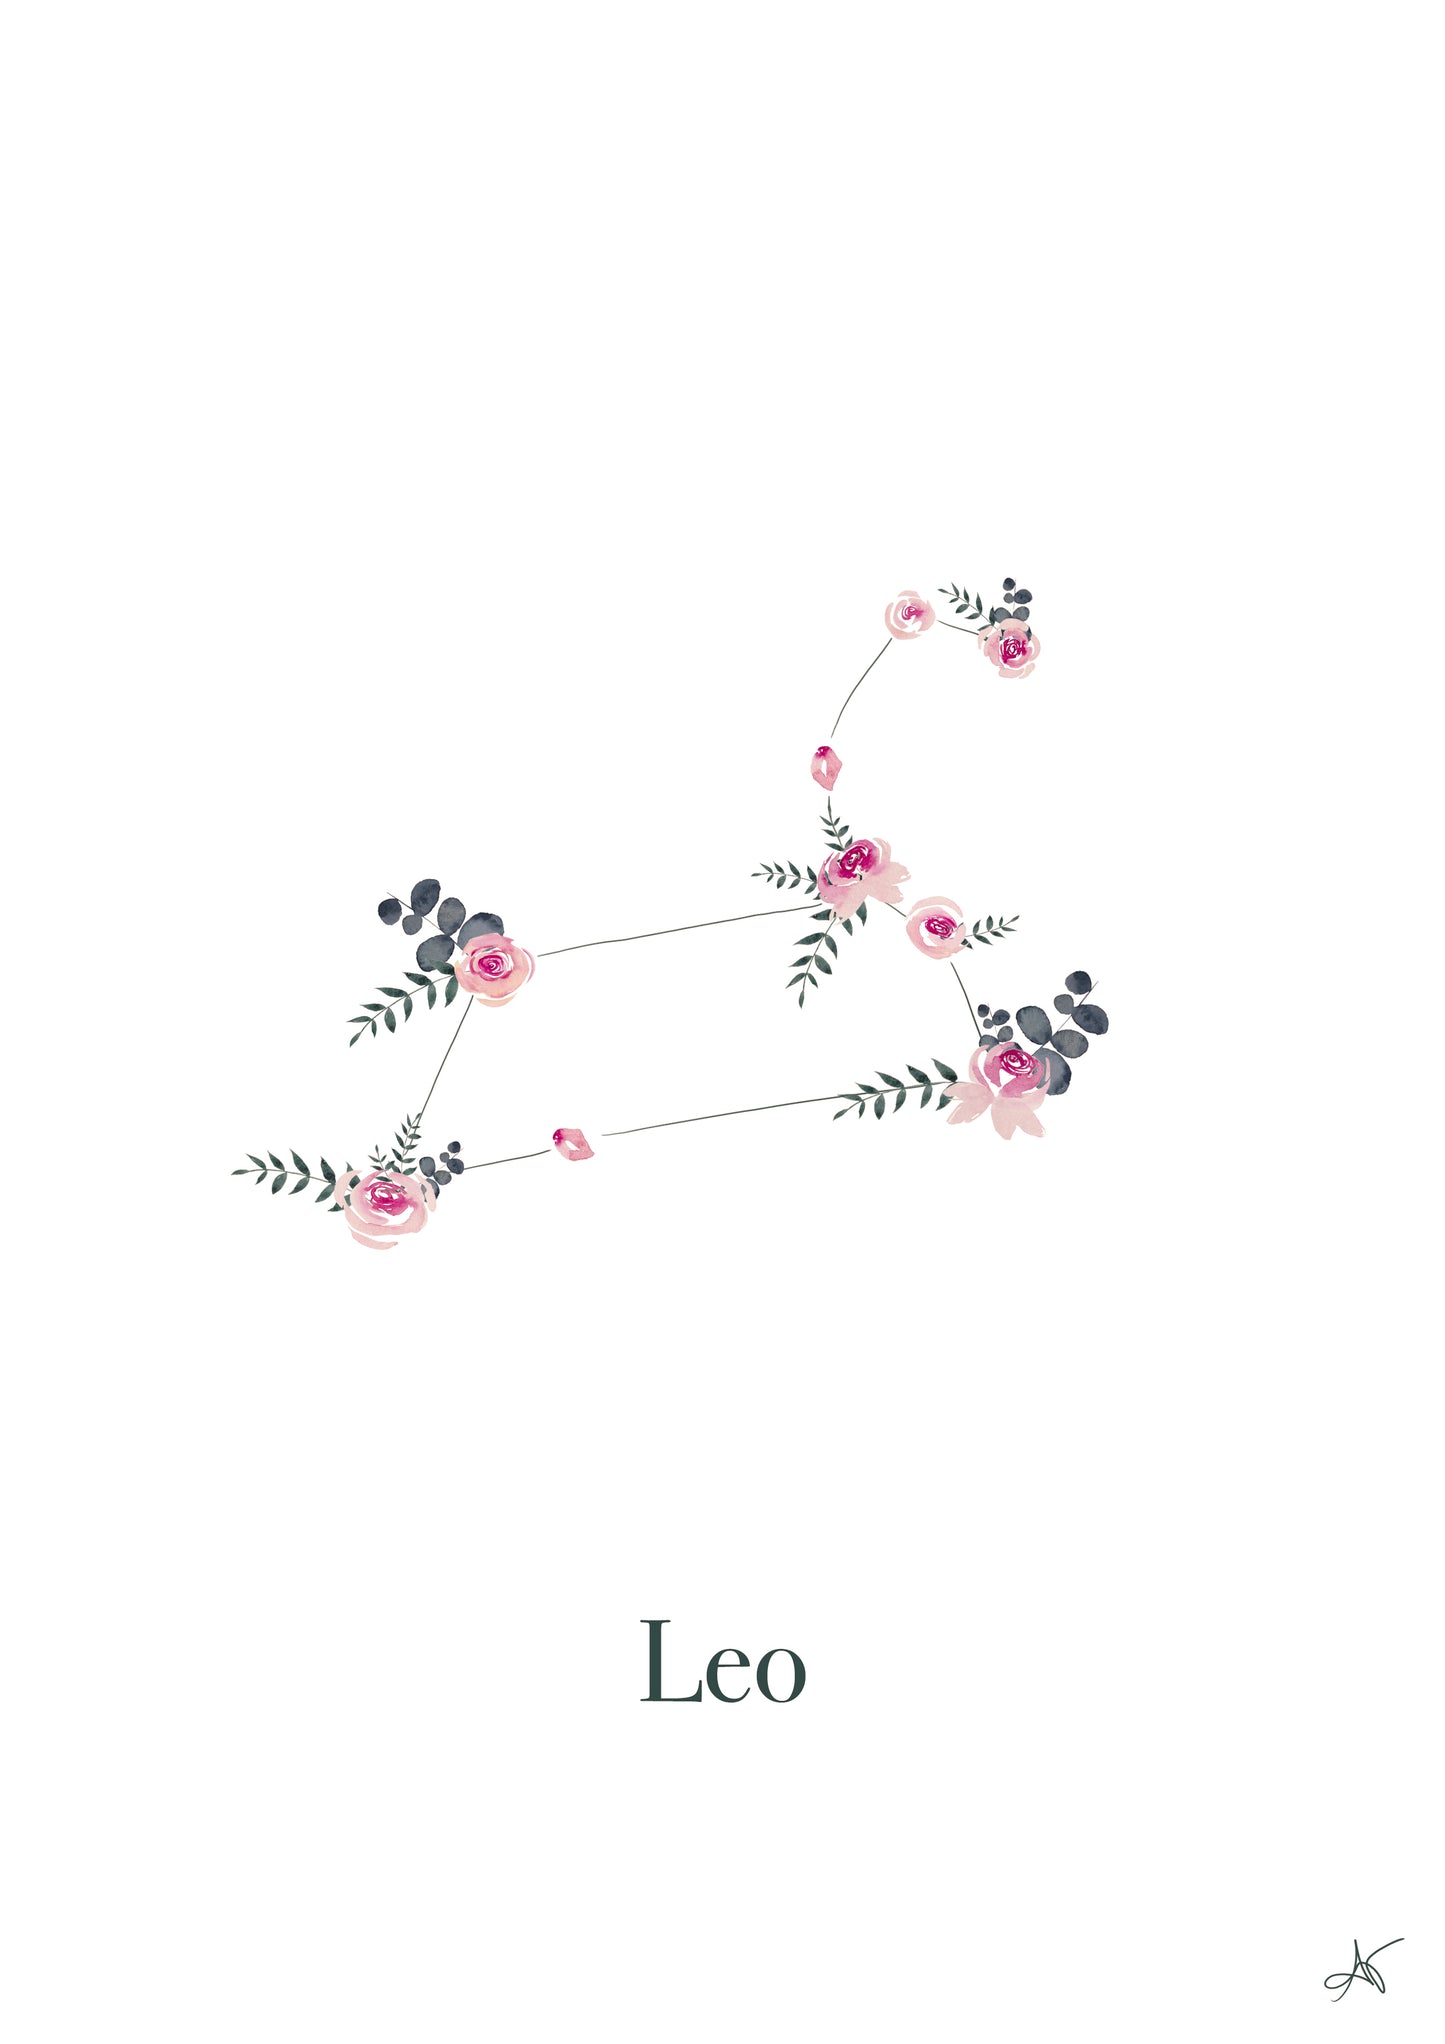 "Leo" - Roses (eng)